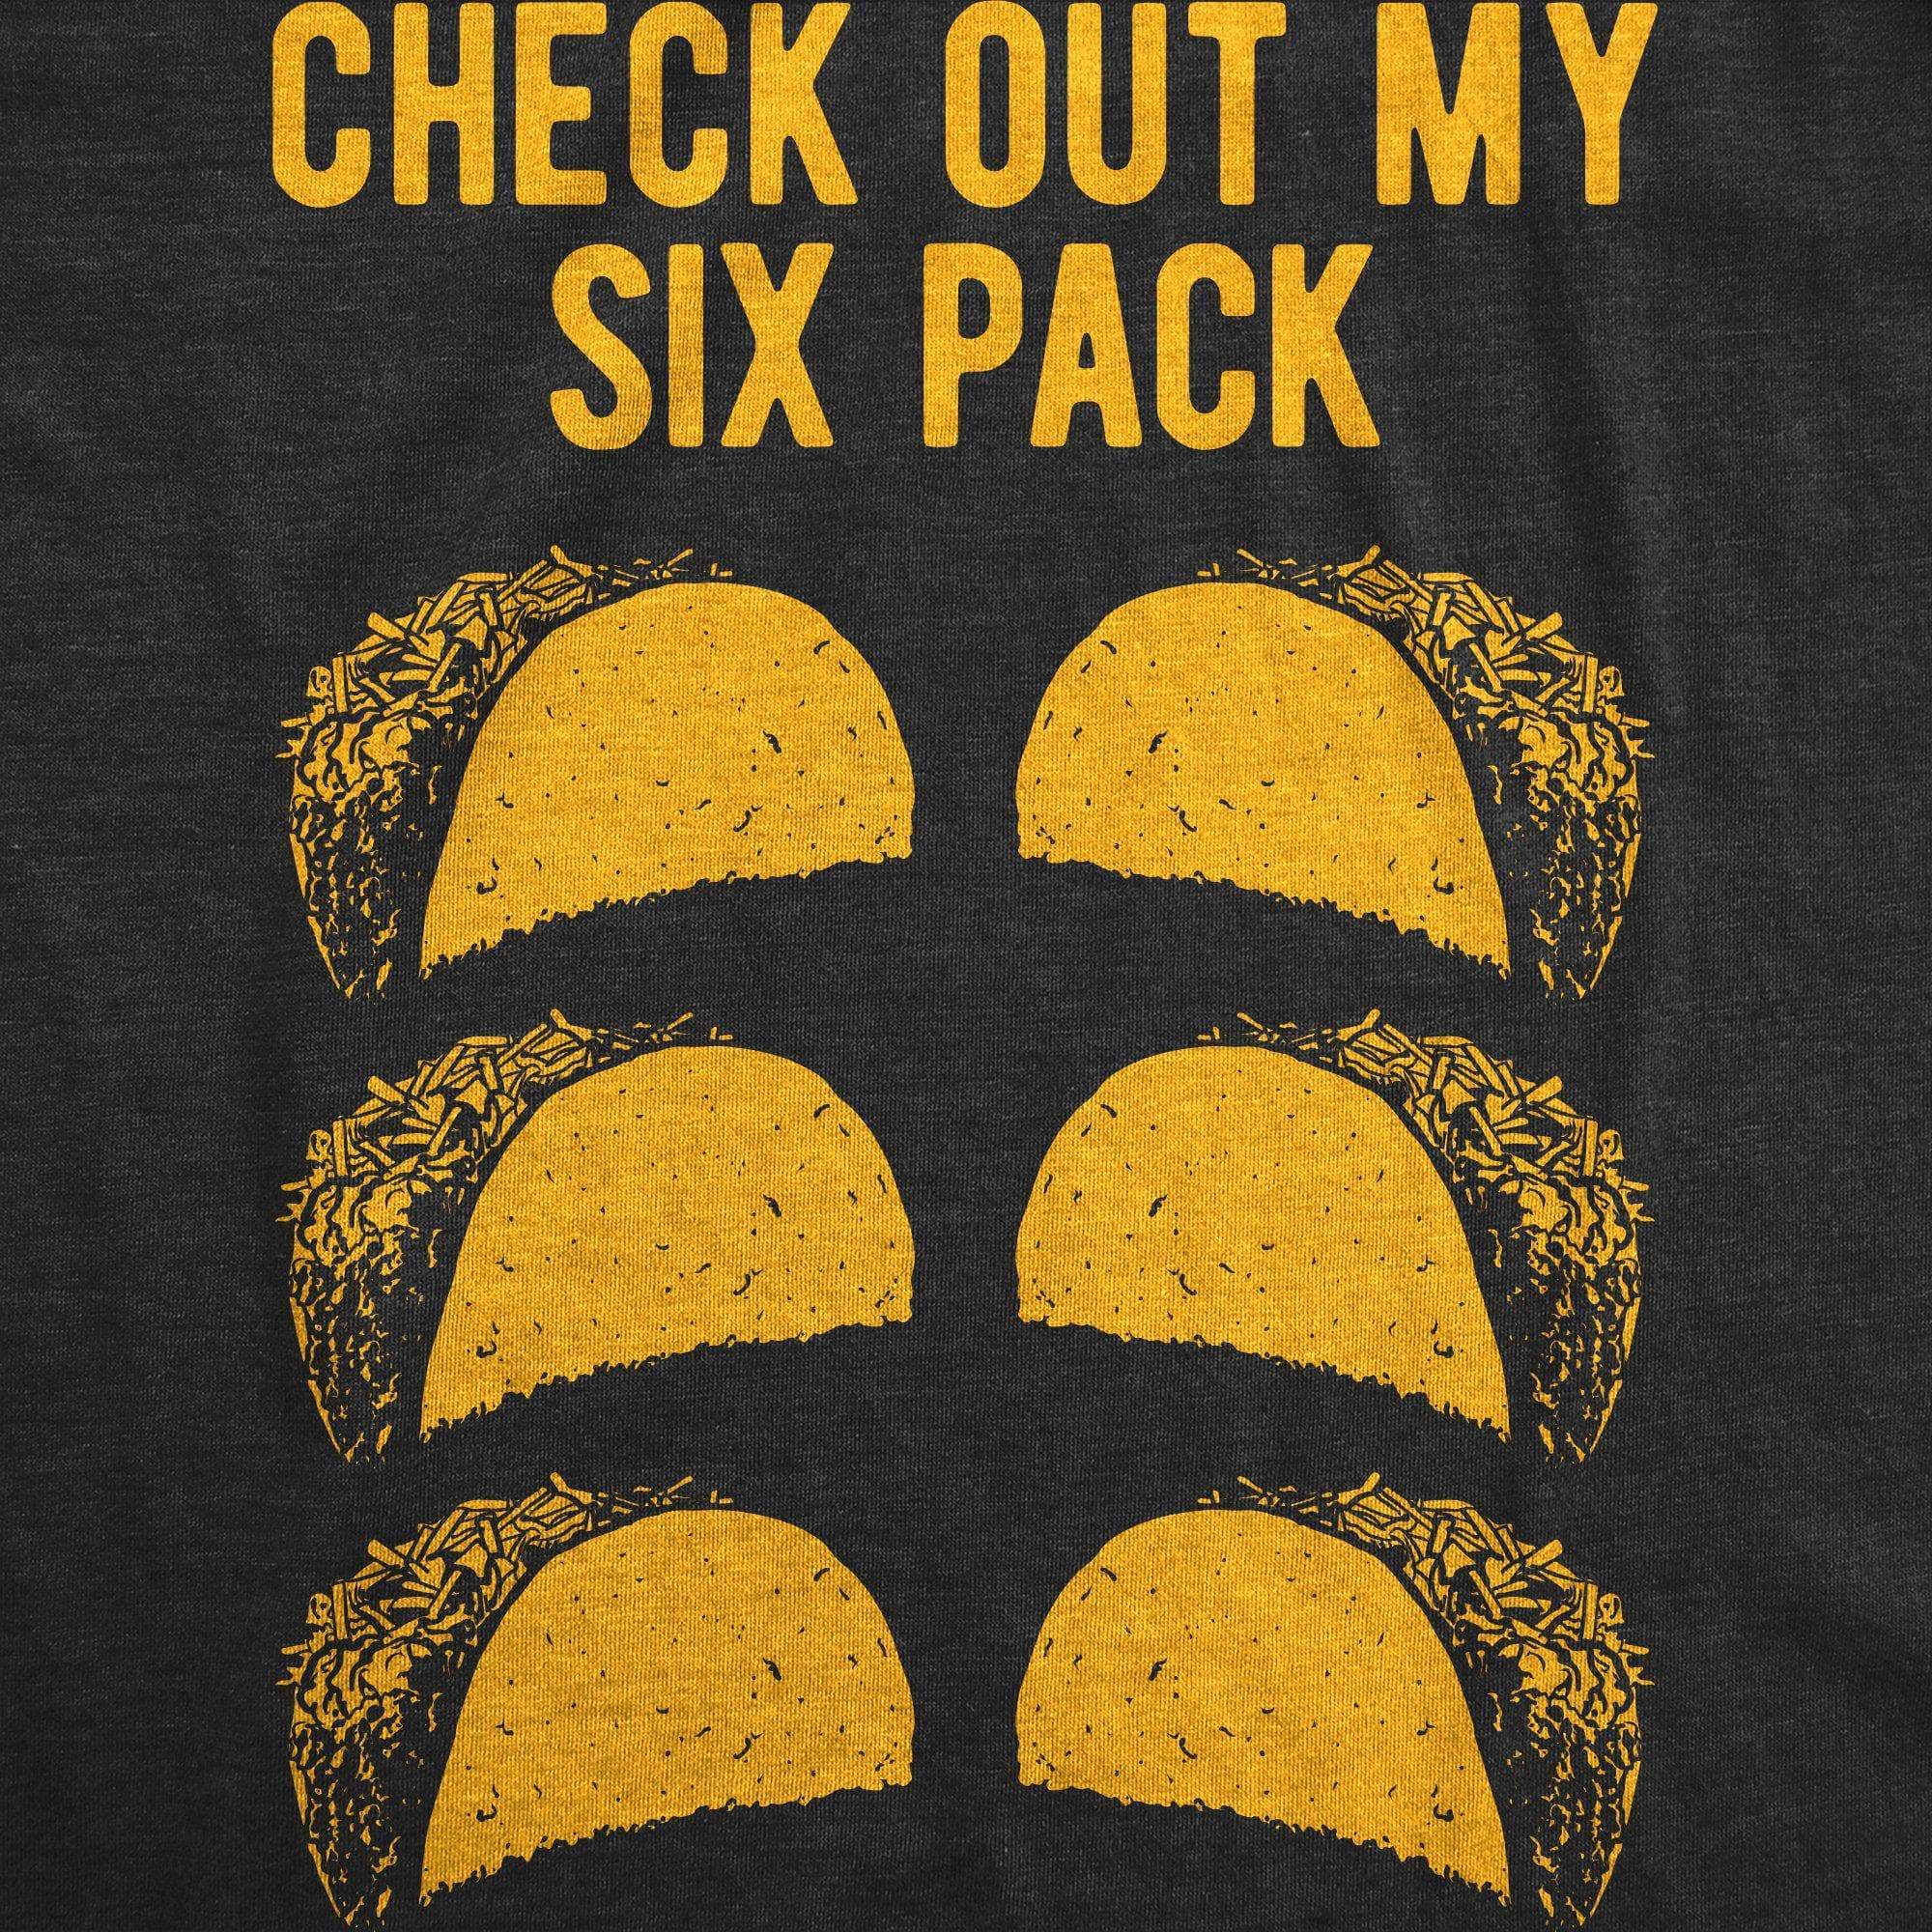 Check Out My Six Pack Men's Tshirt  -  Crazy Dog T-Shirts